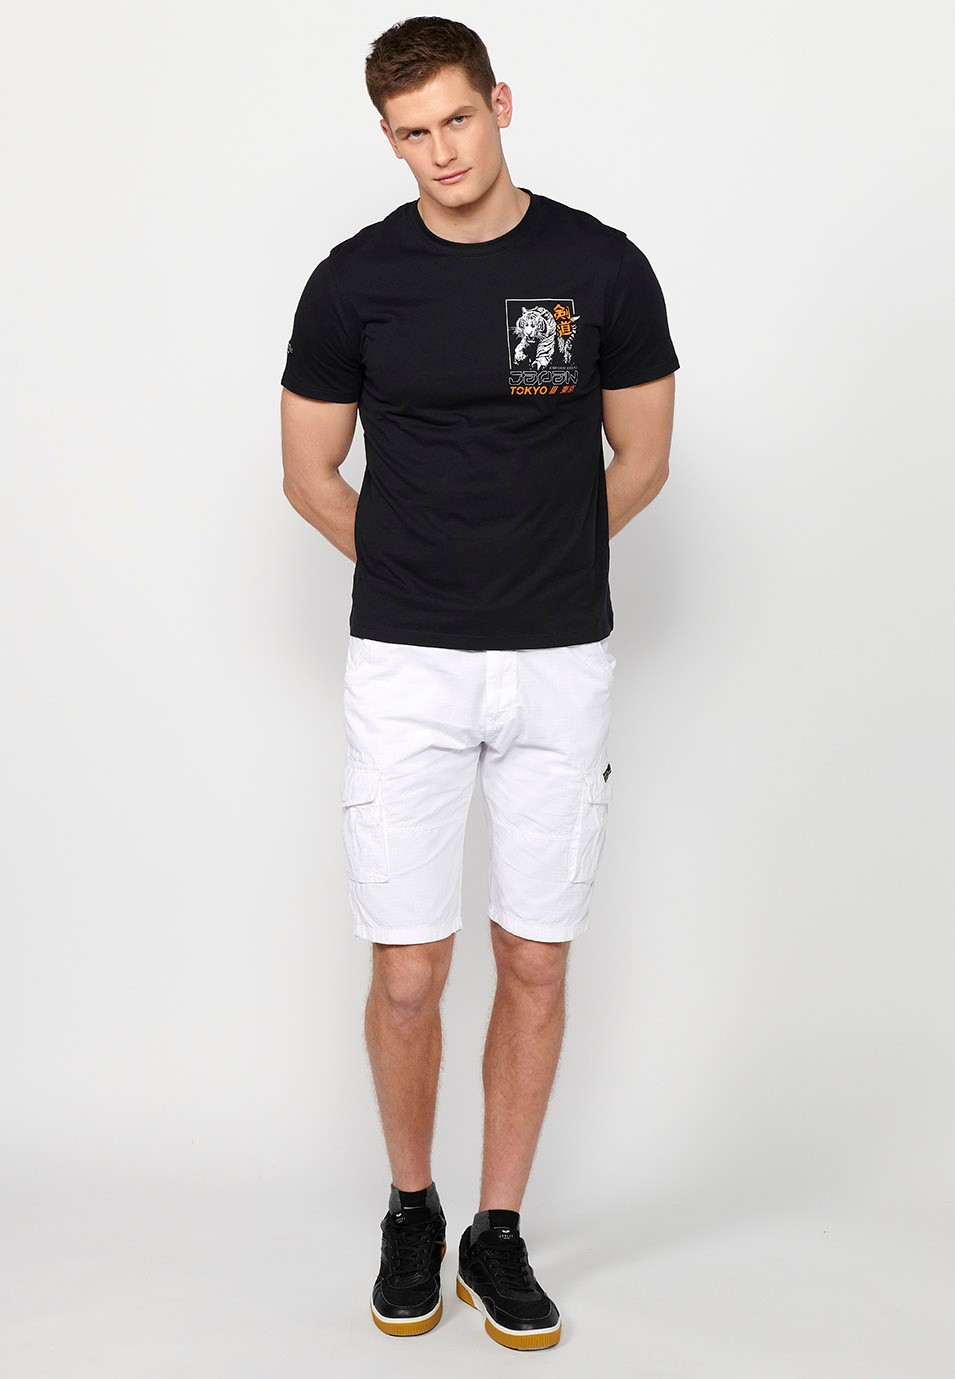 Short-sleeved cotton t-shirt with jungle tigger back print, black color for men